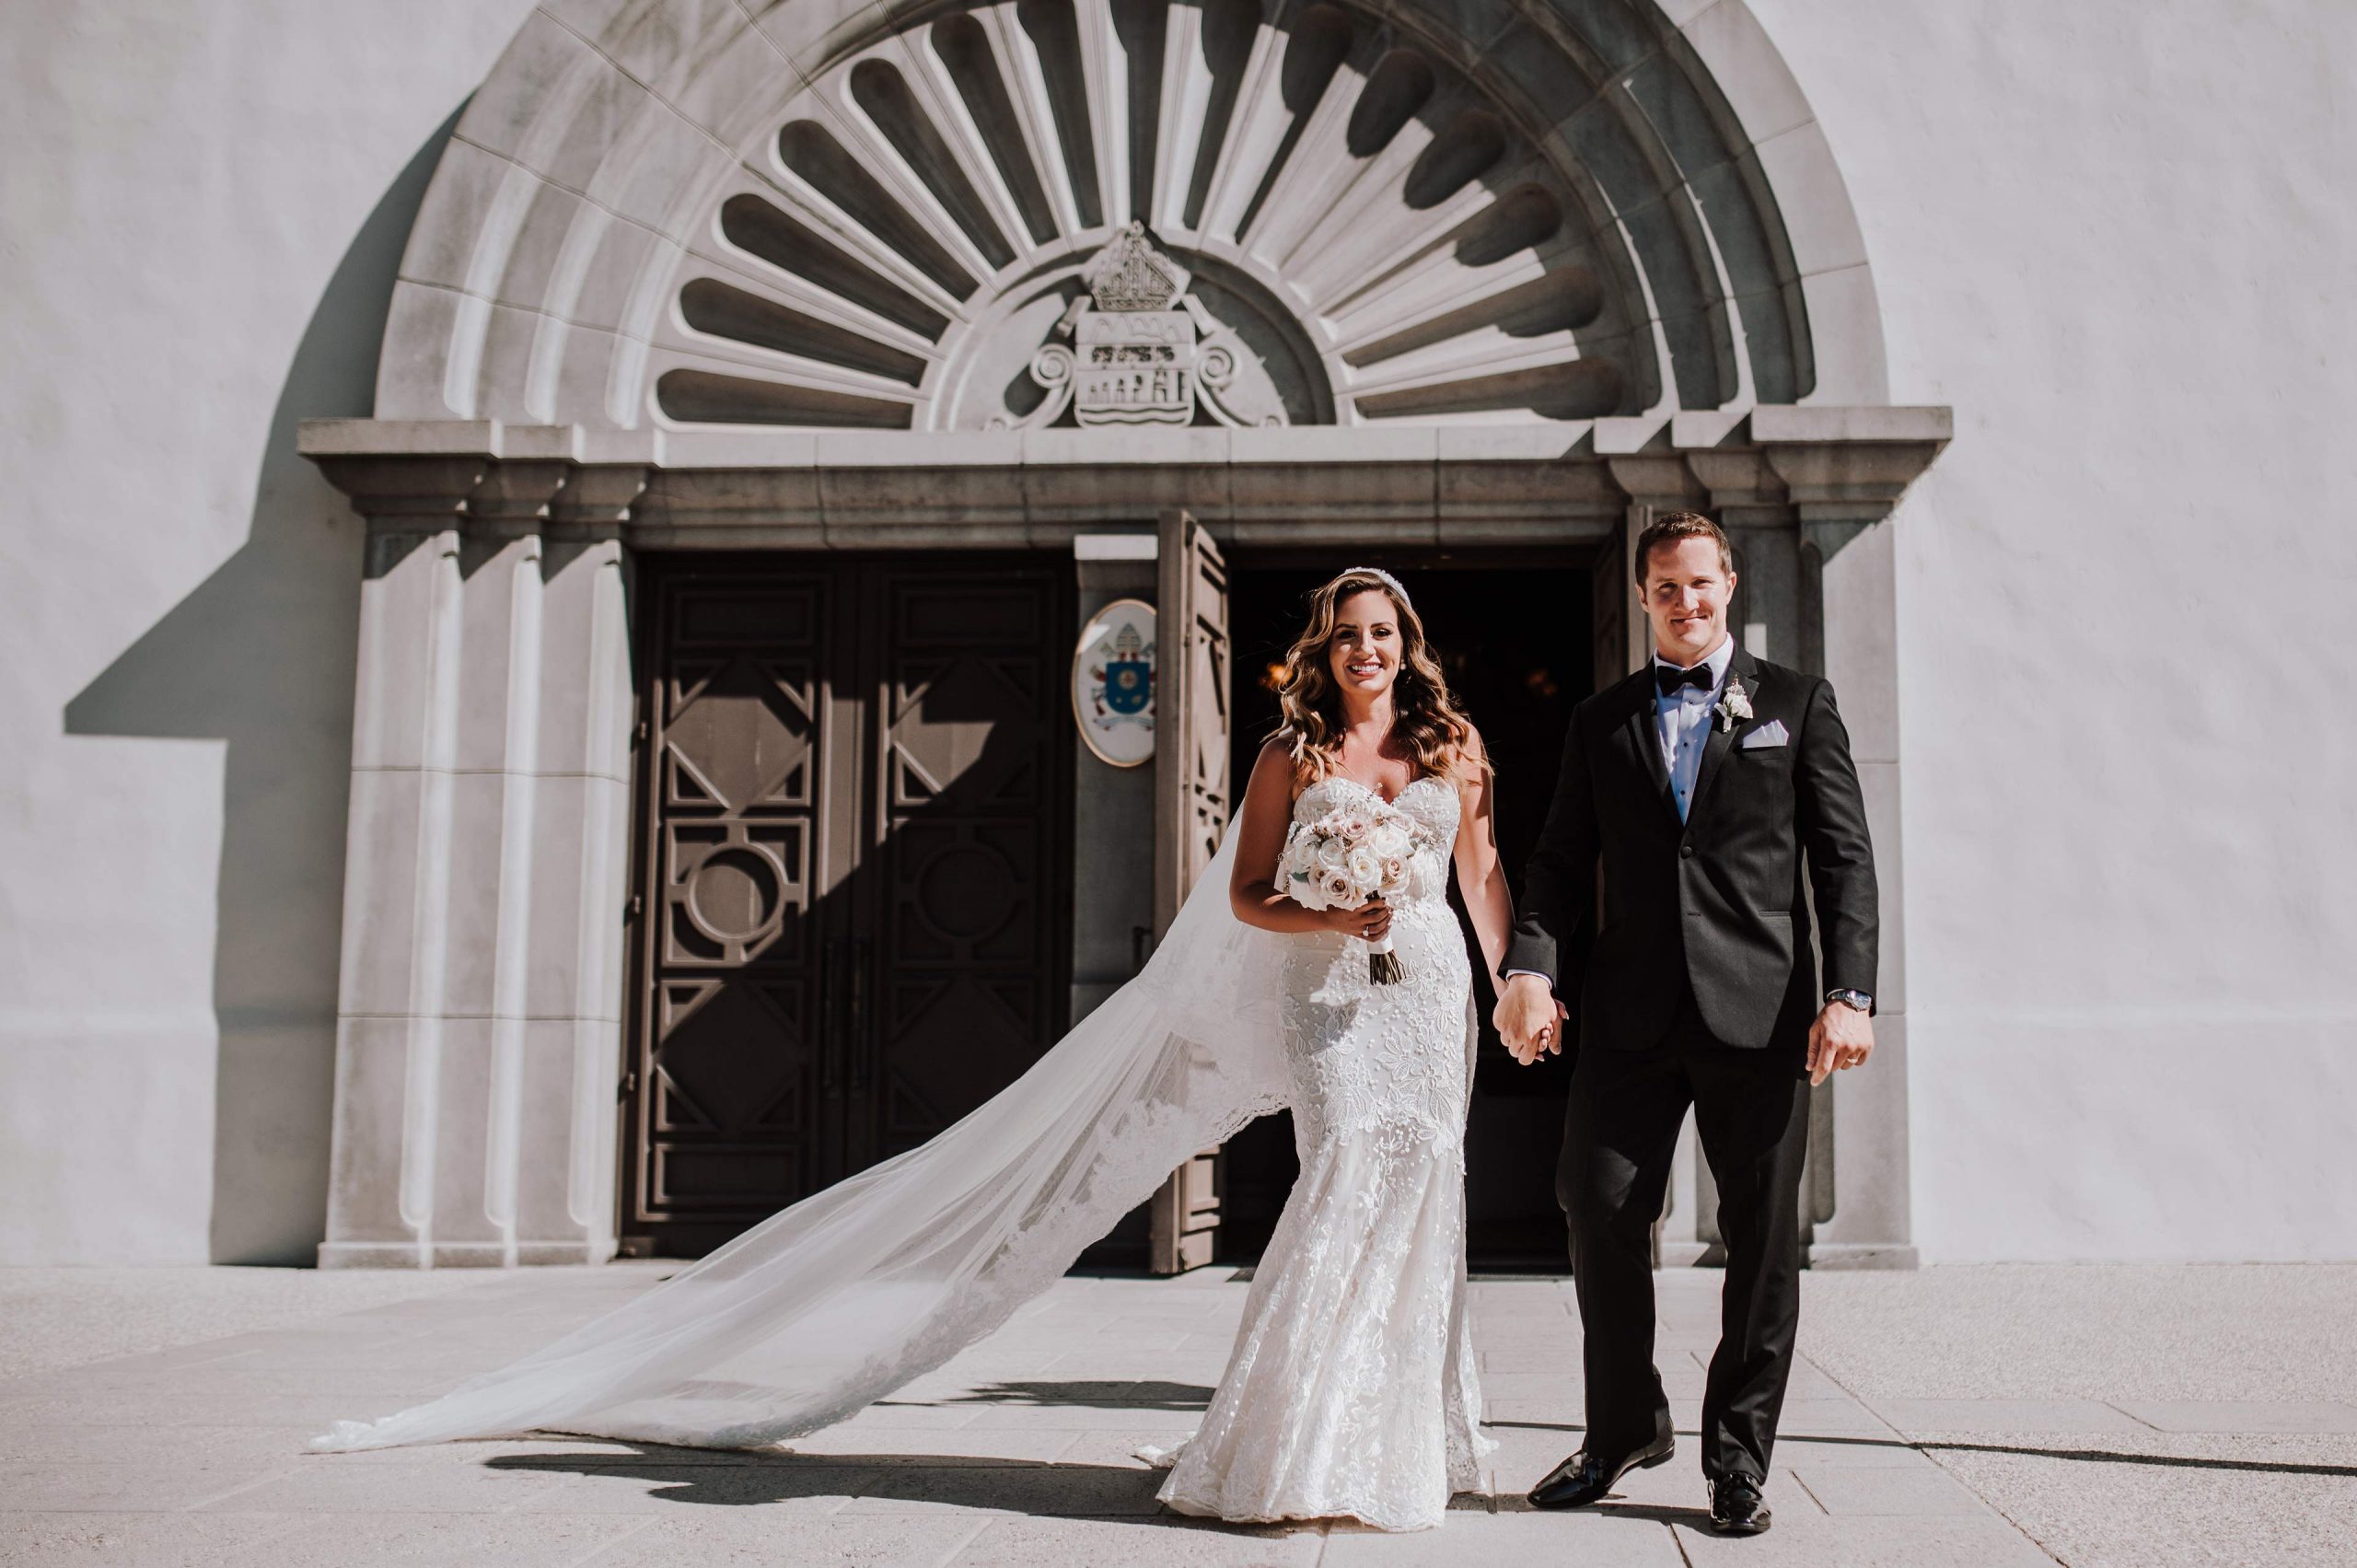 Mission Basilica San Juan Capistrano Wedding - wedding photography in California - 18